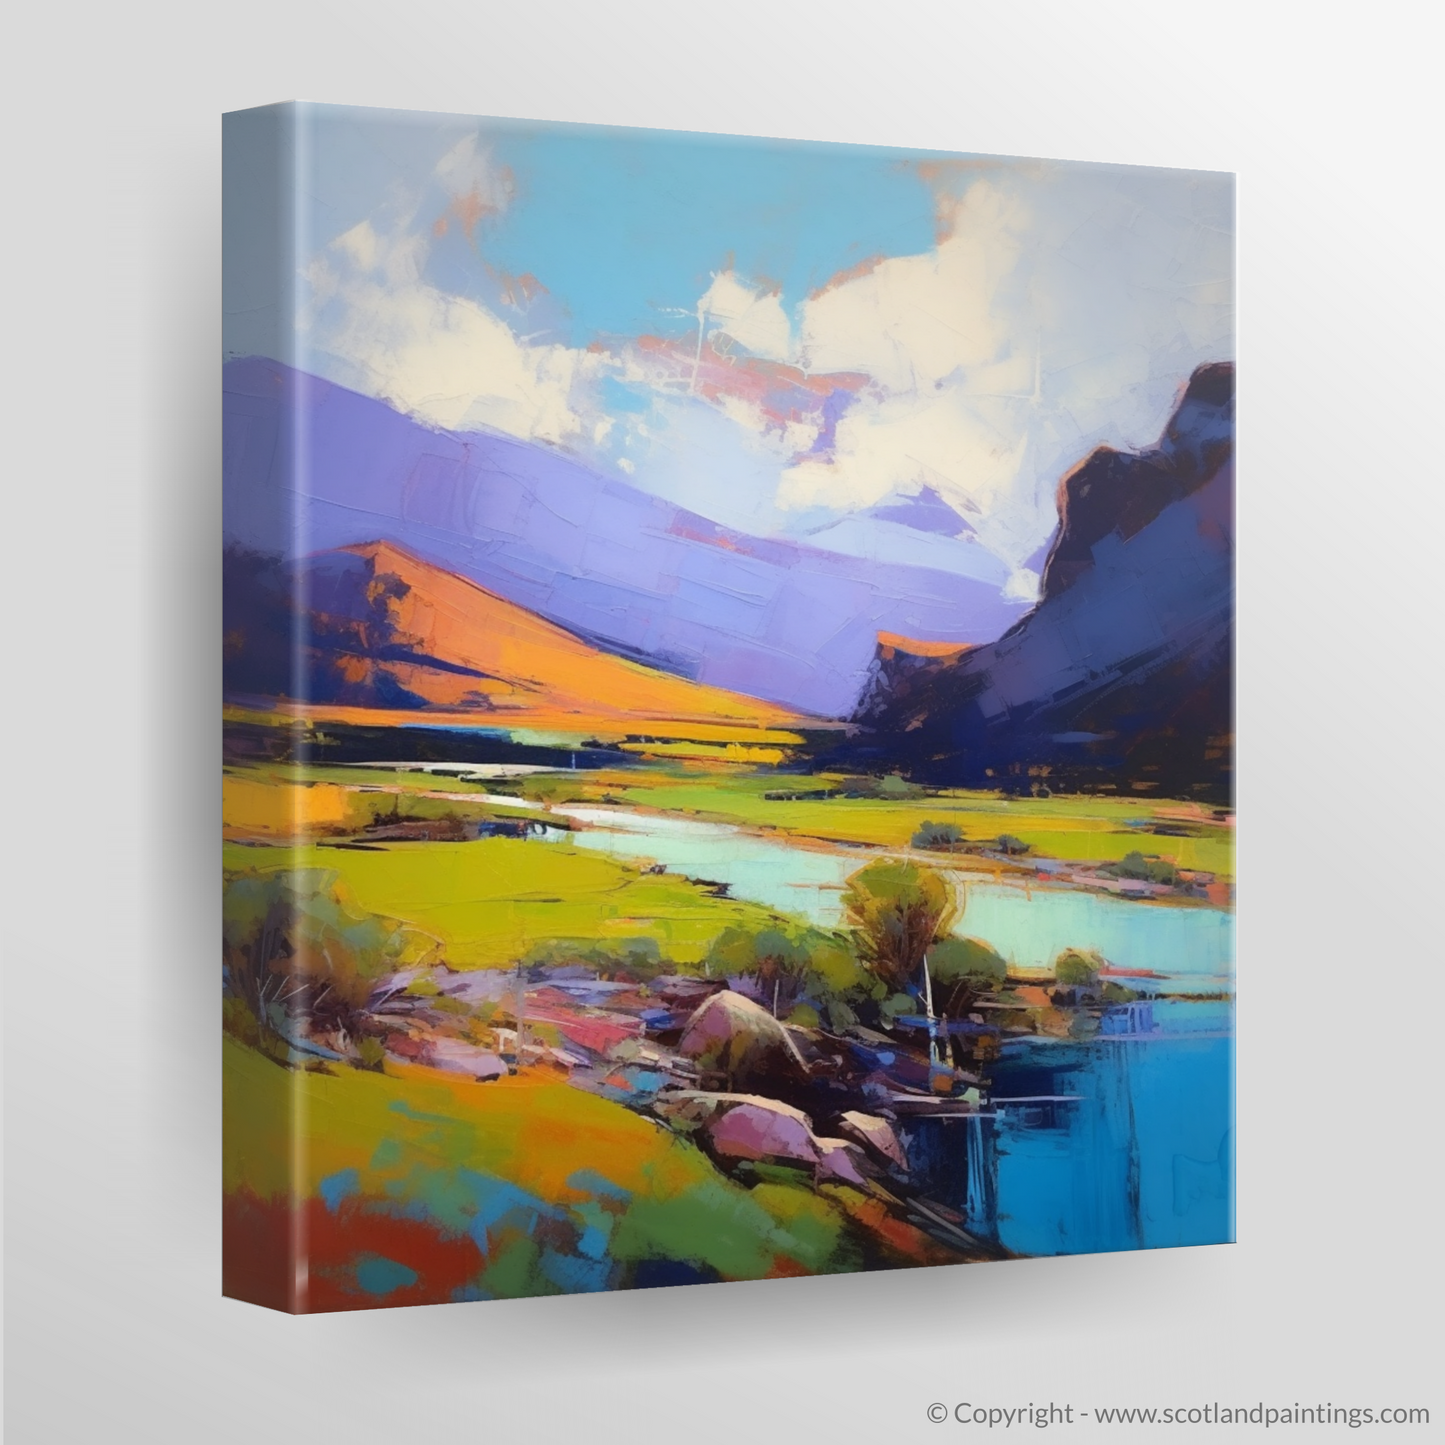 Summer Embrace of Glen Shiel: An Expressionist Ode to the Highlands